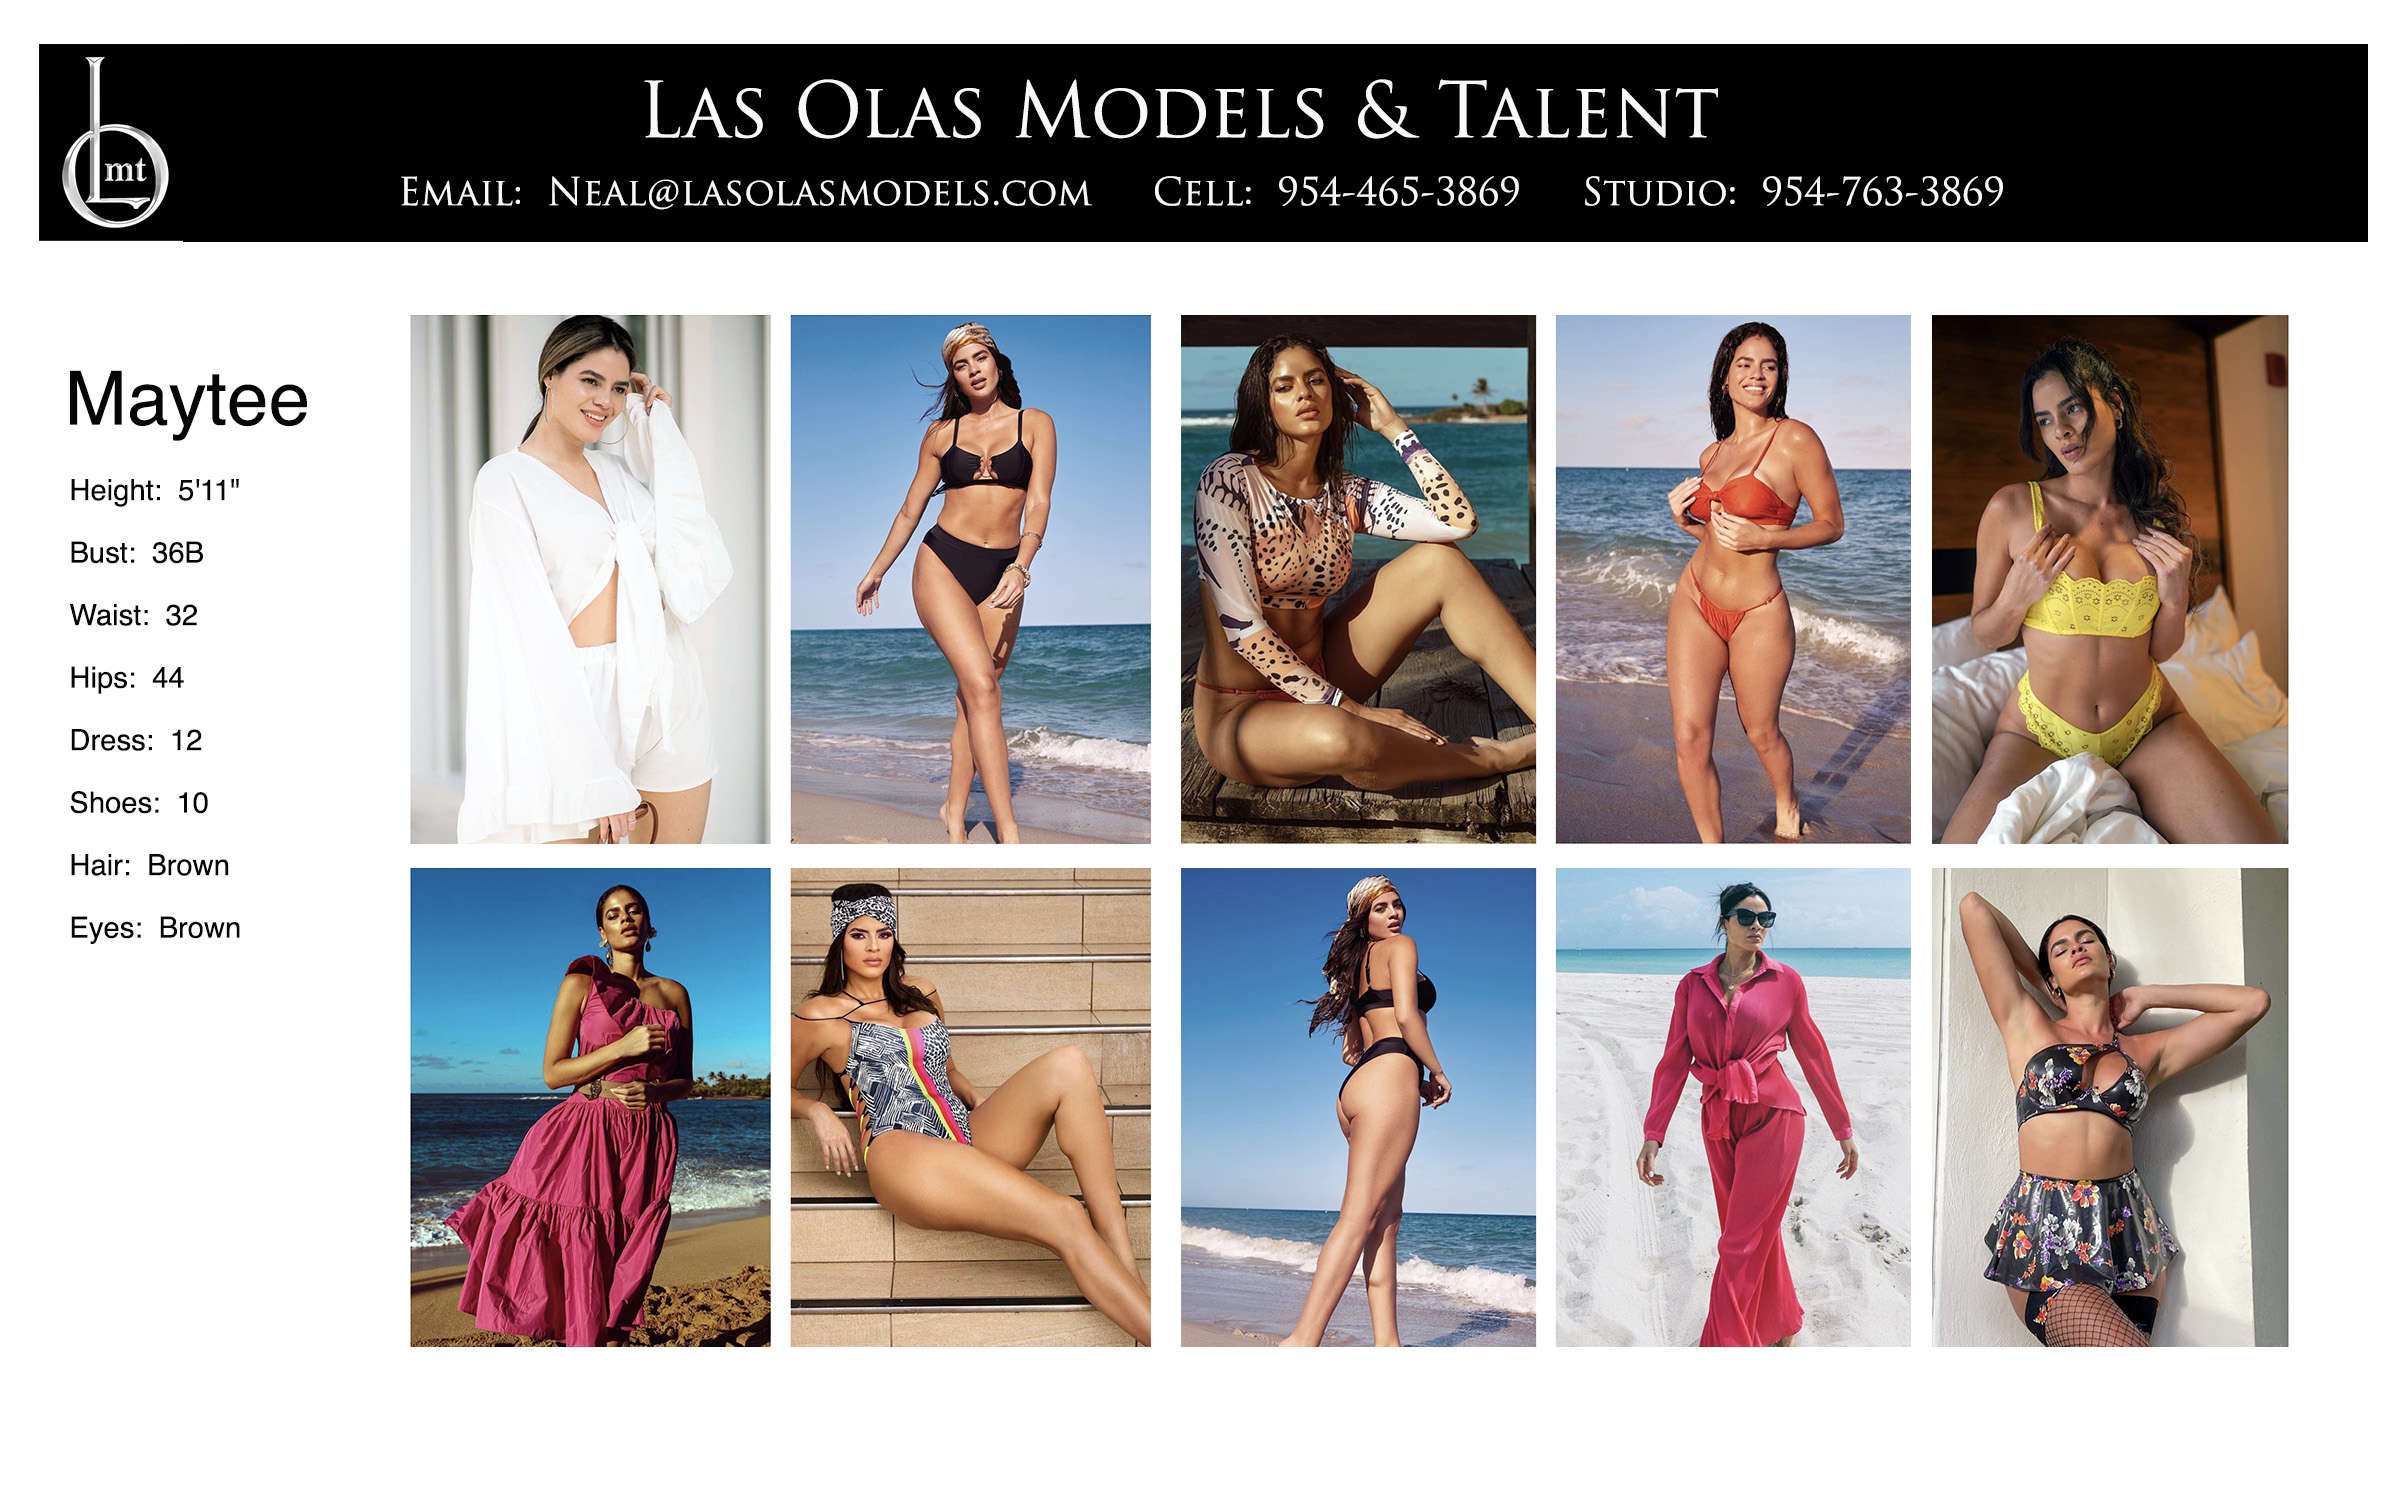 Models Fort Lauderdale Miami South Florida - Print Video Commercial Catalog - Las Olas Models & Talent - Maytee Comp